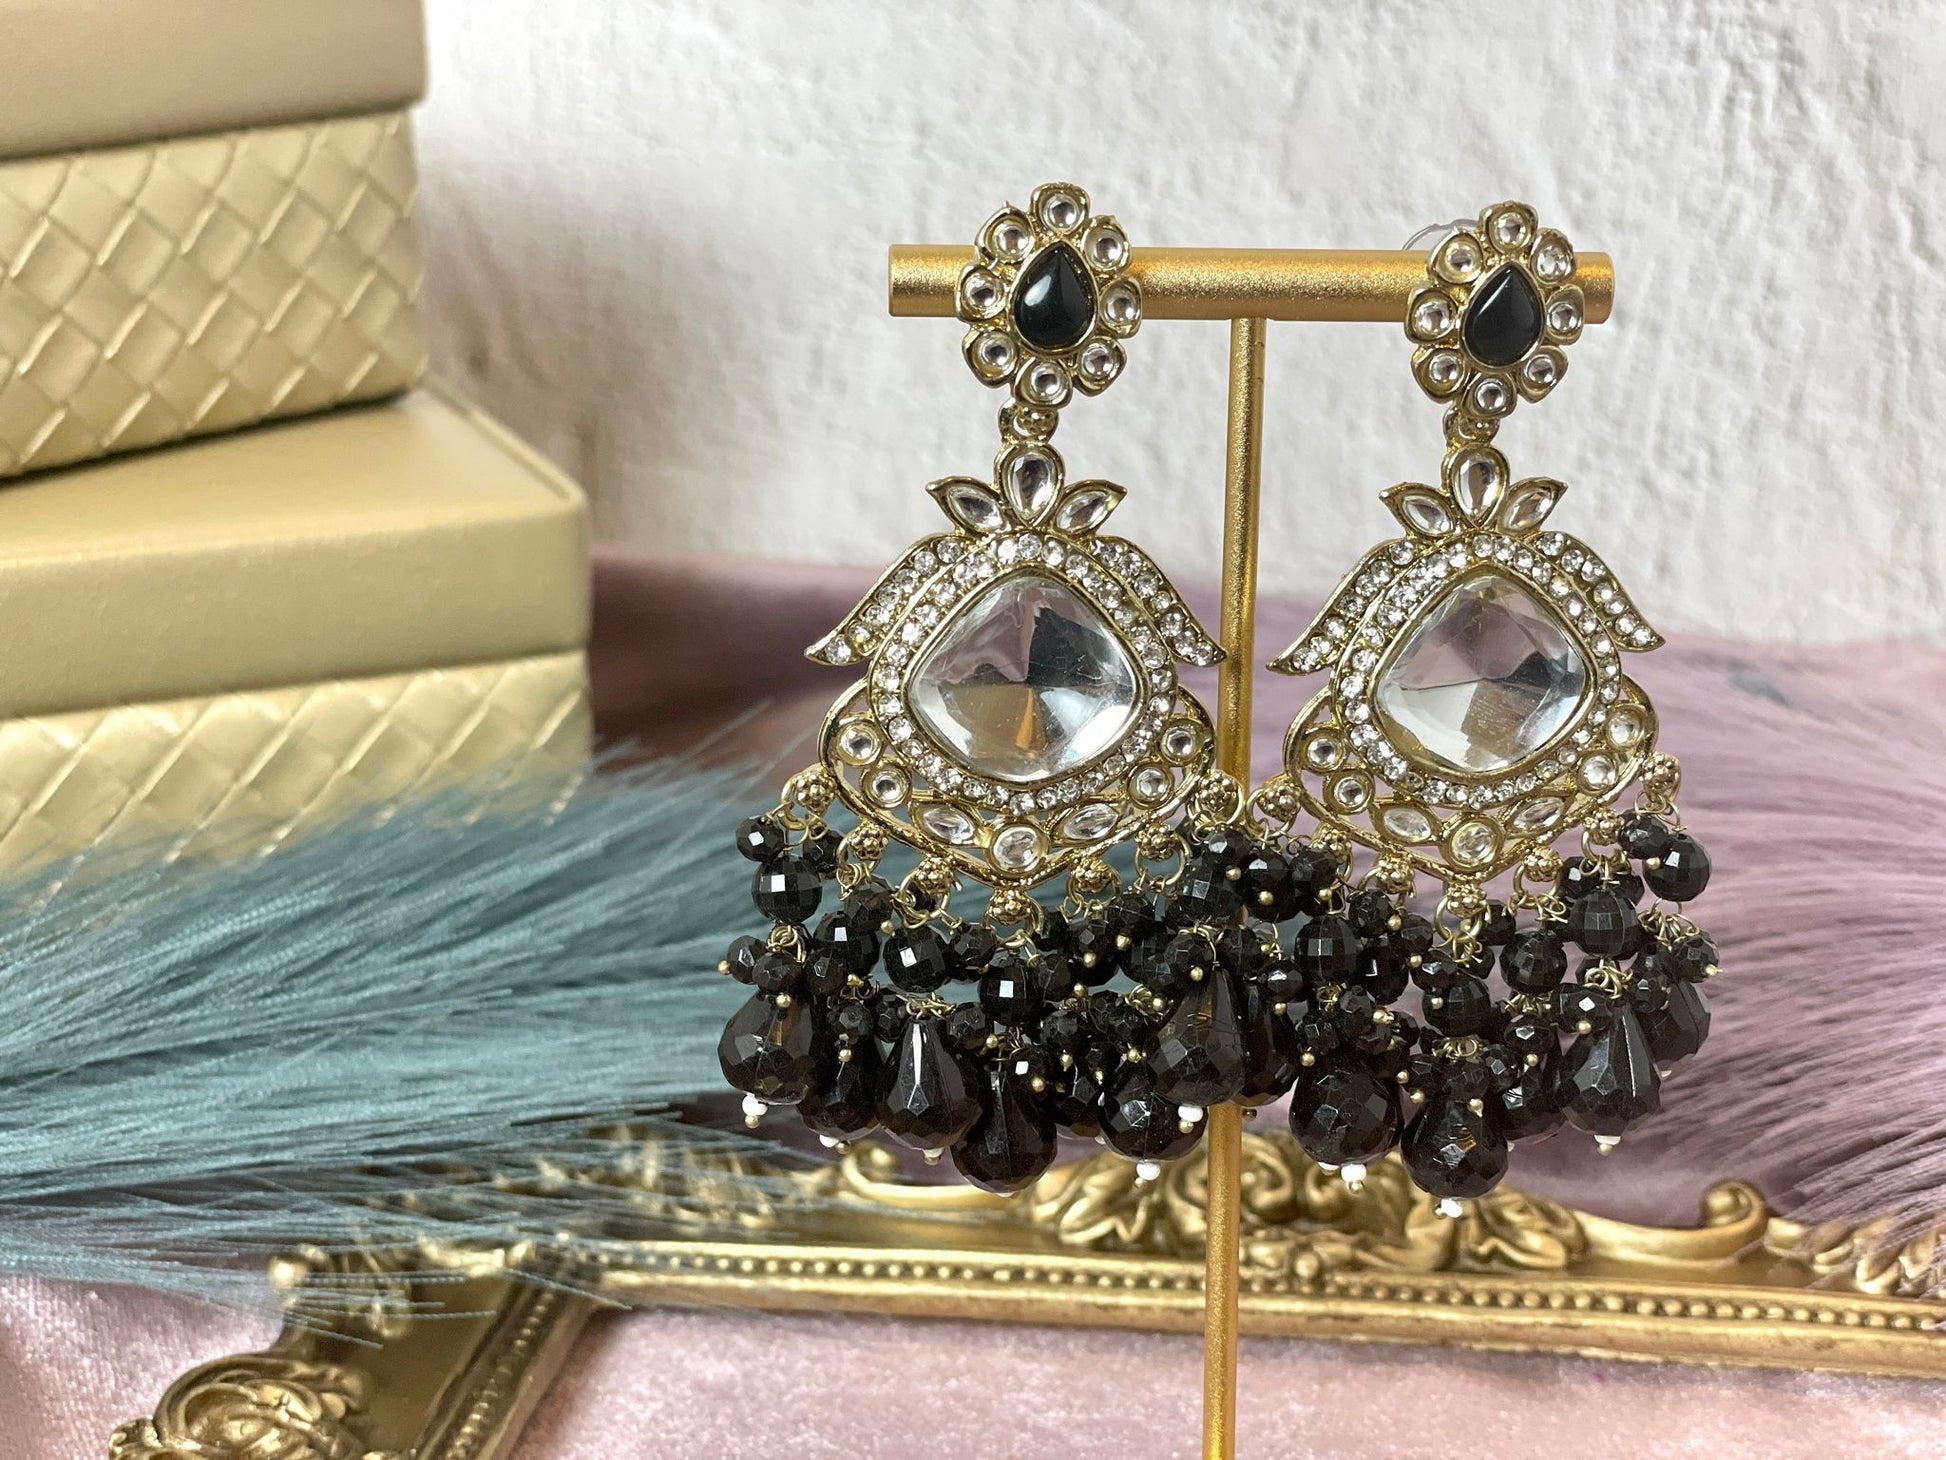 Gold plated black earrings